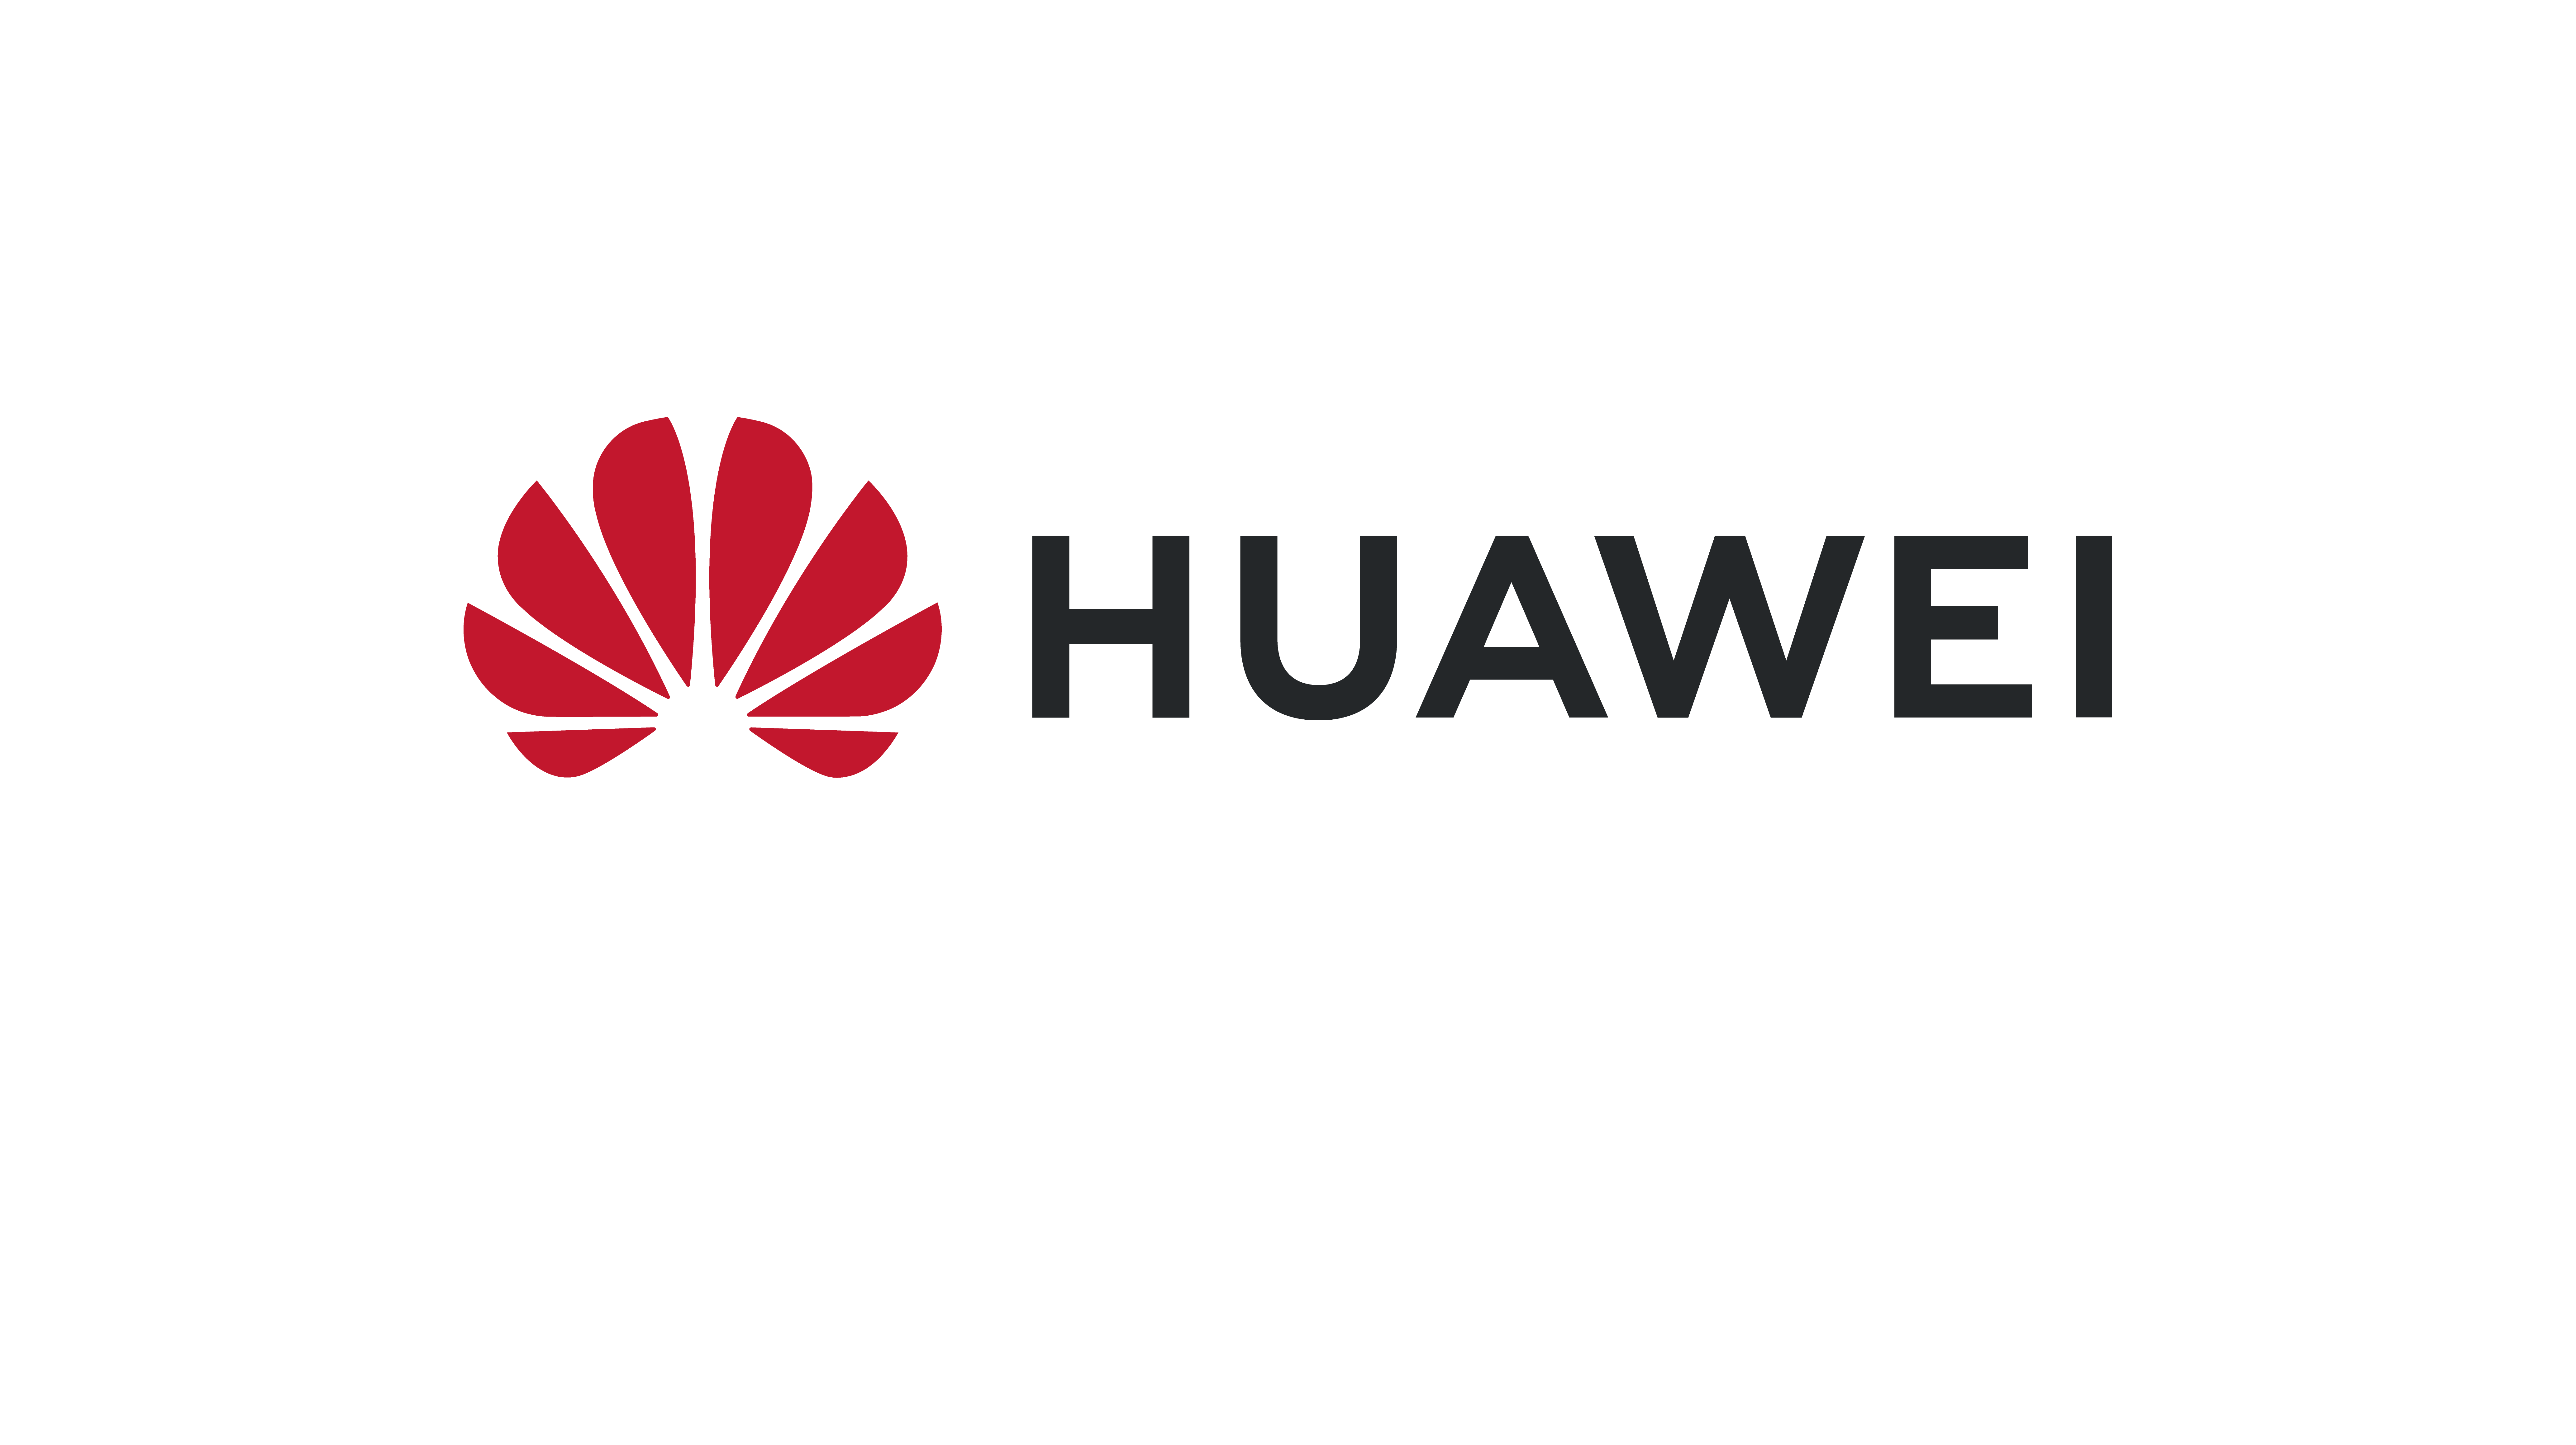 New Huawei Logo - 180115-CBG Adjusted HUAWEI logo - FMI